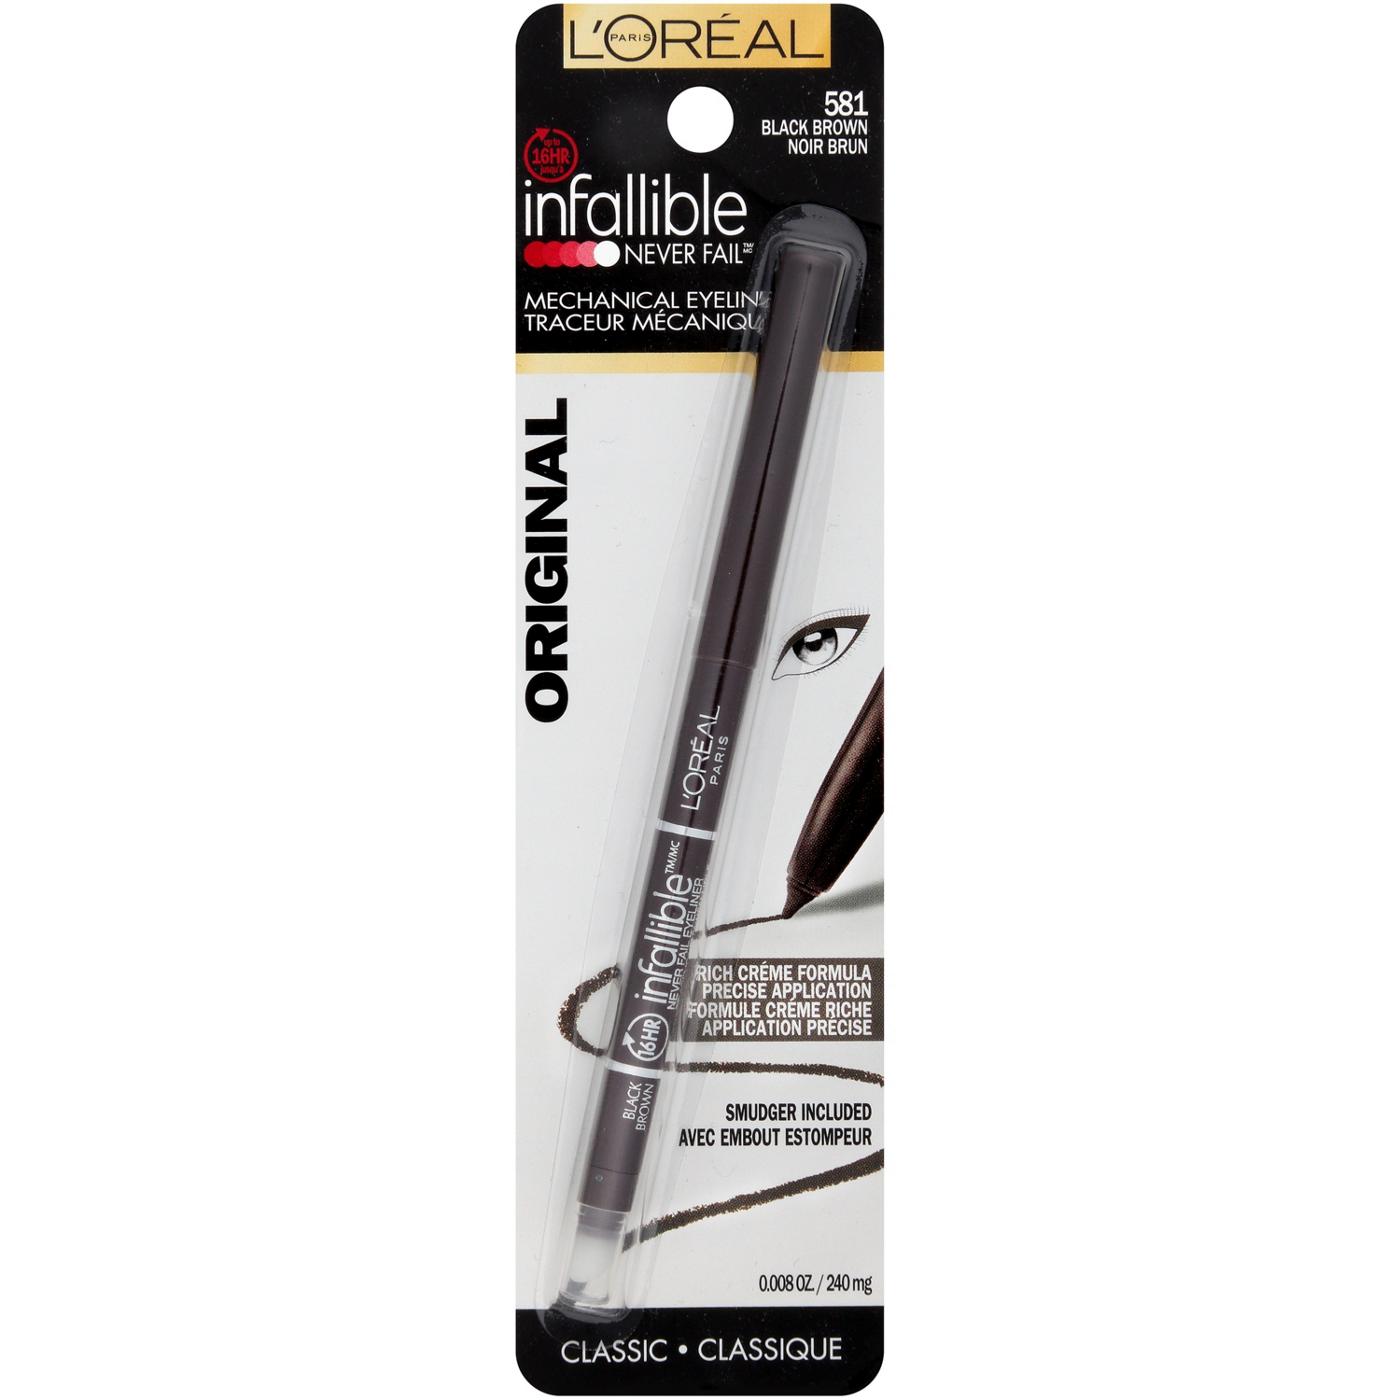 L'Oréal Paris Infallible Never Fail Pencil Eyeliner with Built in Sharpener Black Brown; image 1 of 7